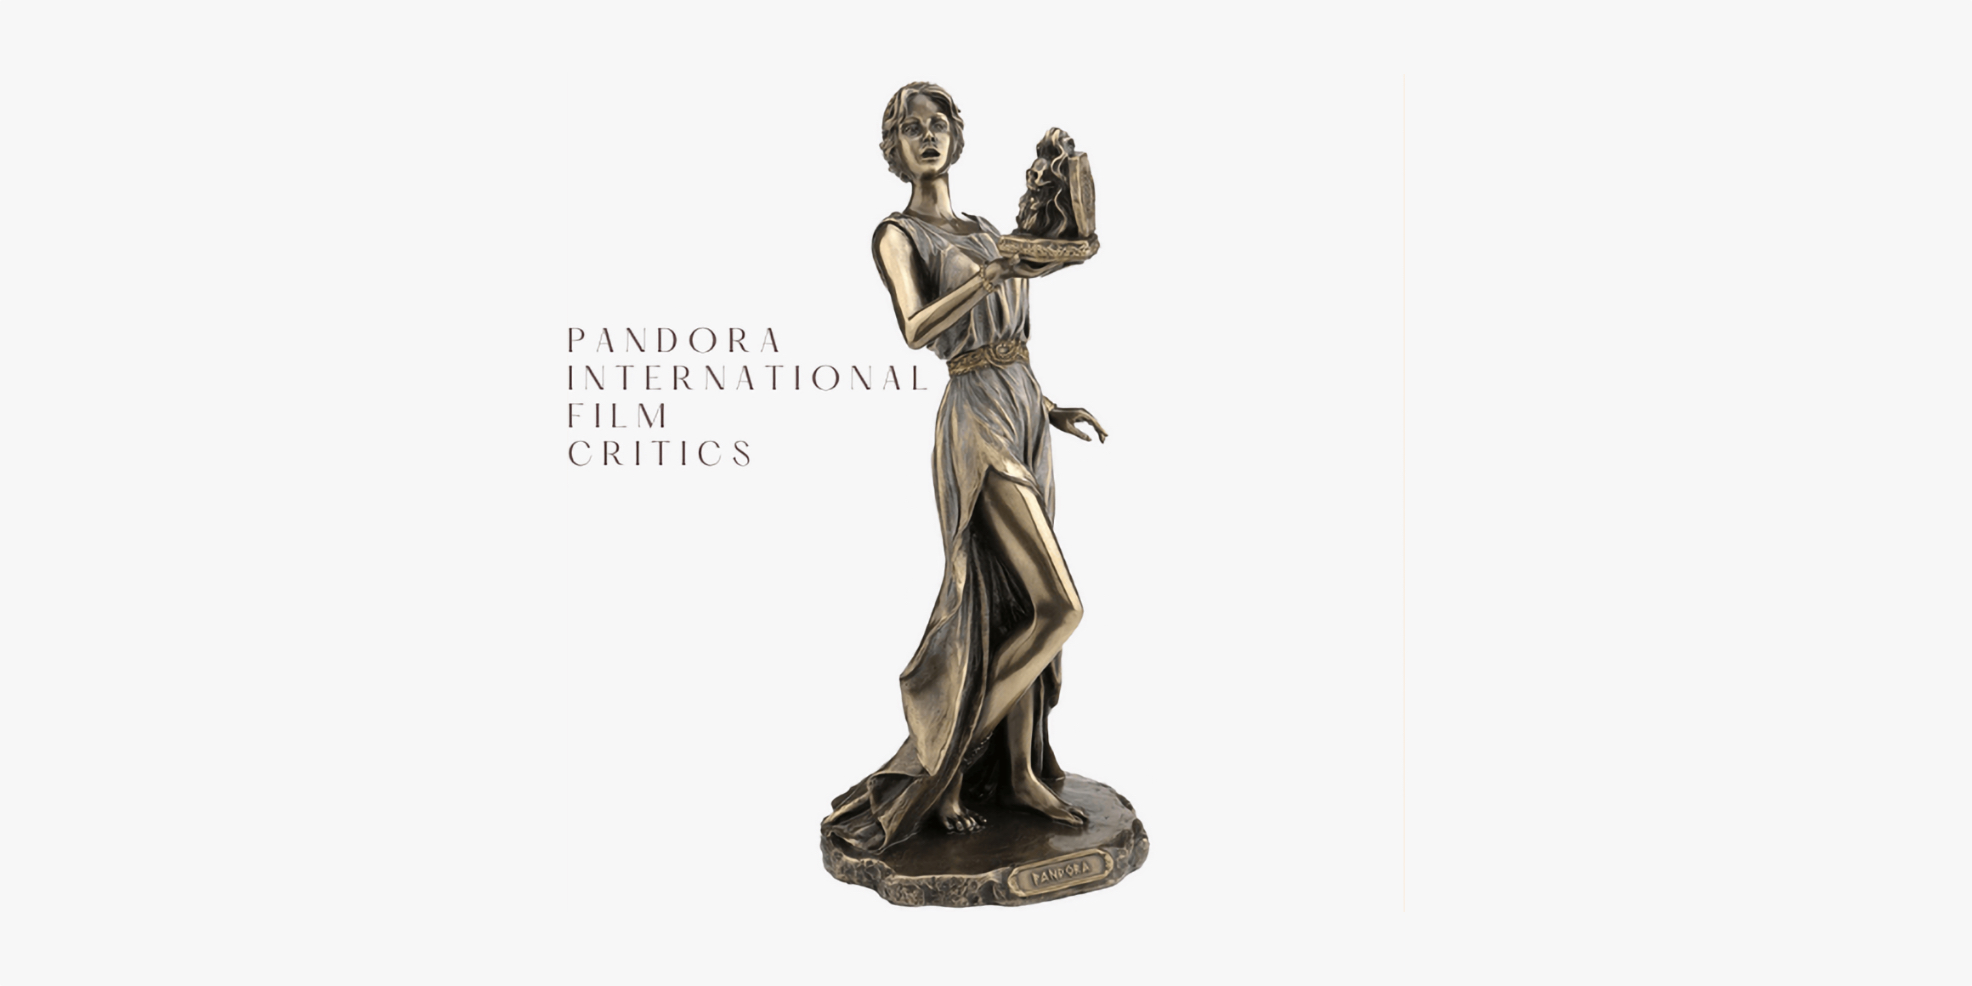 Pandora International Critics 